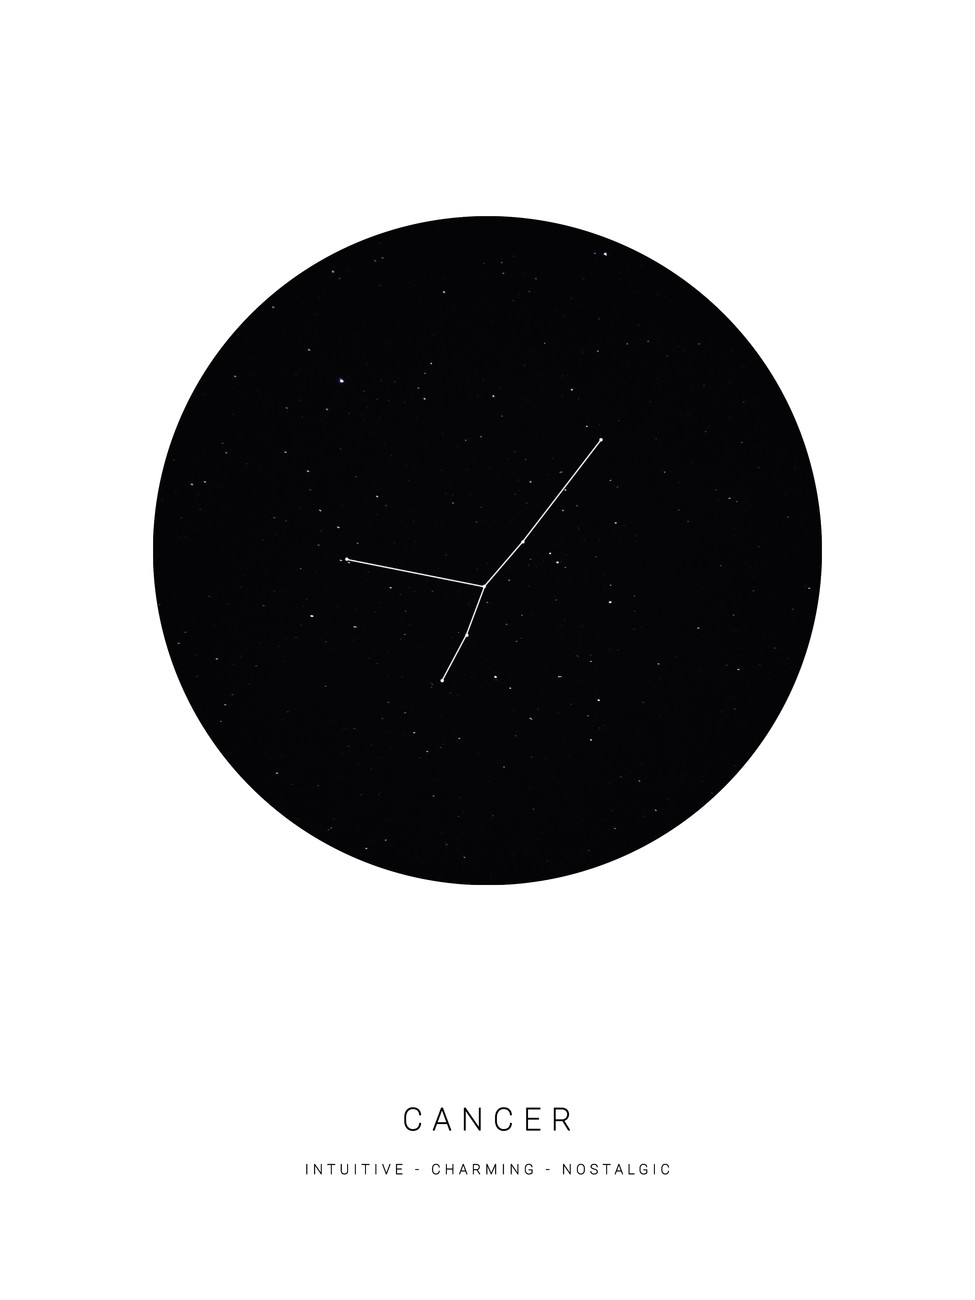 Illustration horoscopecancer